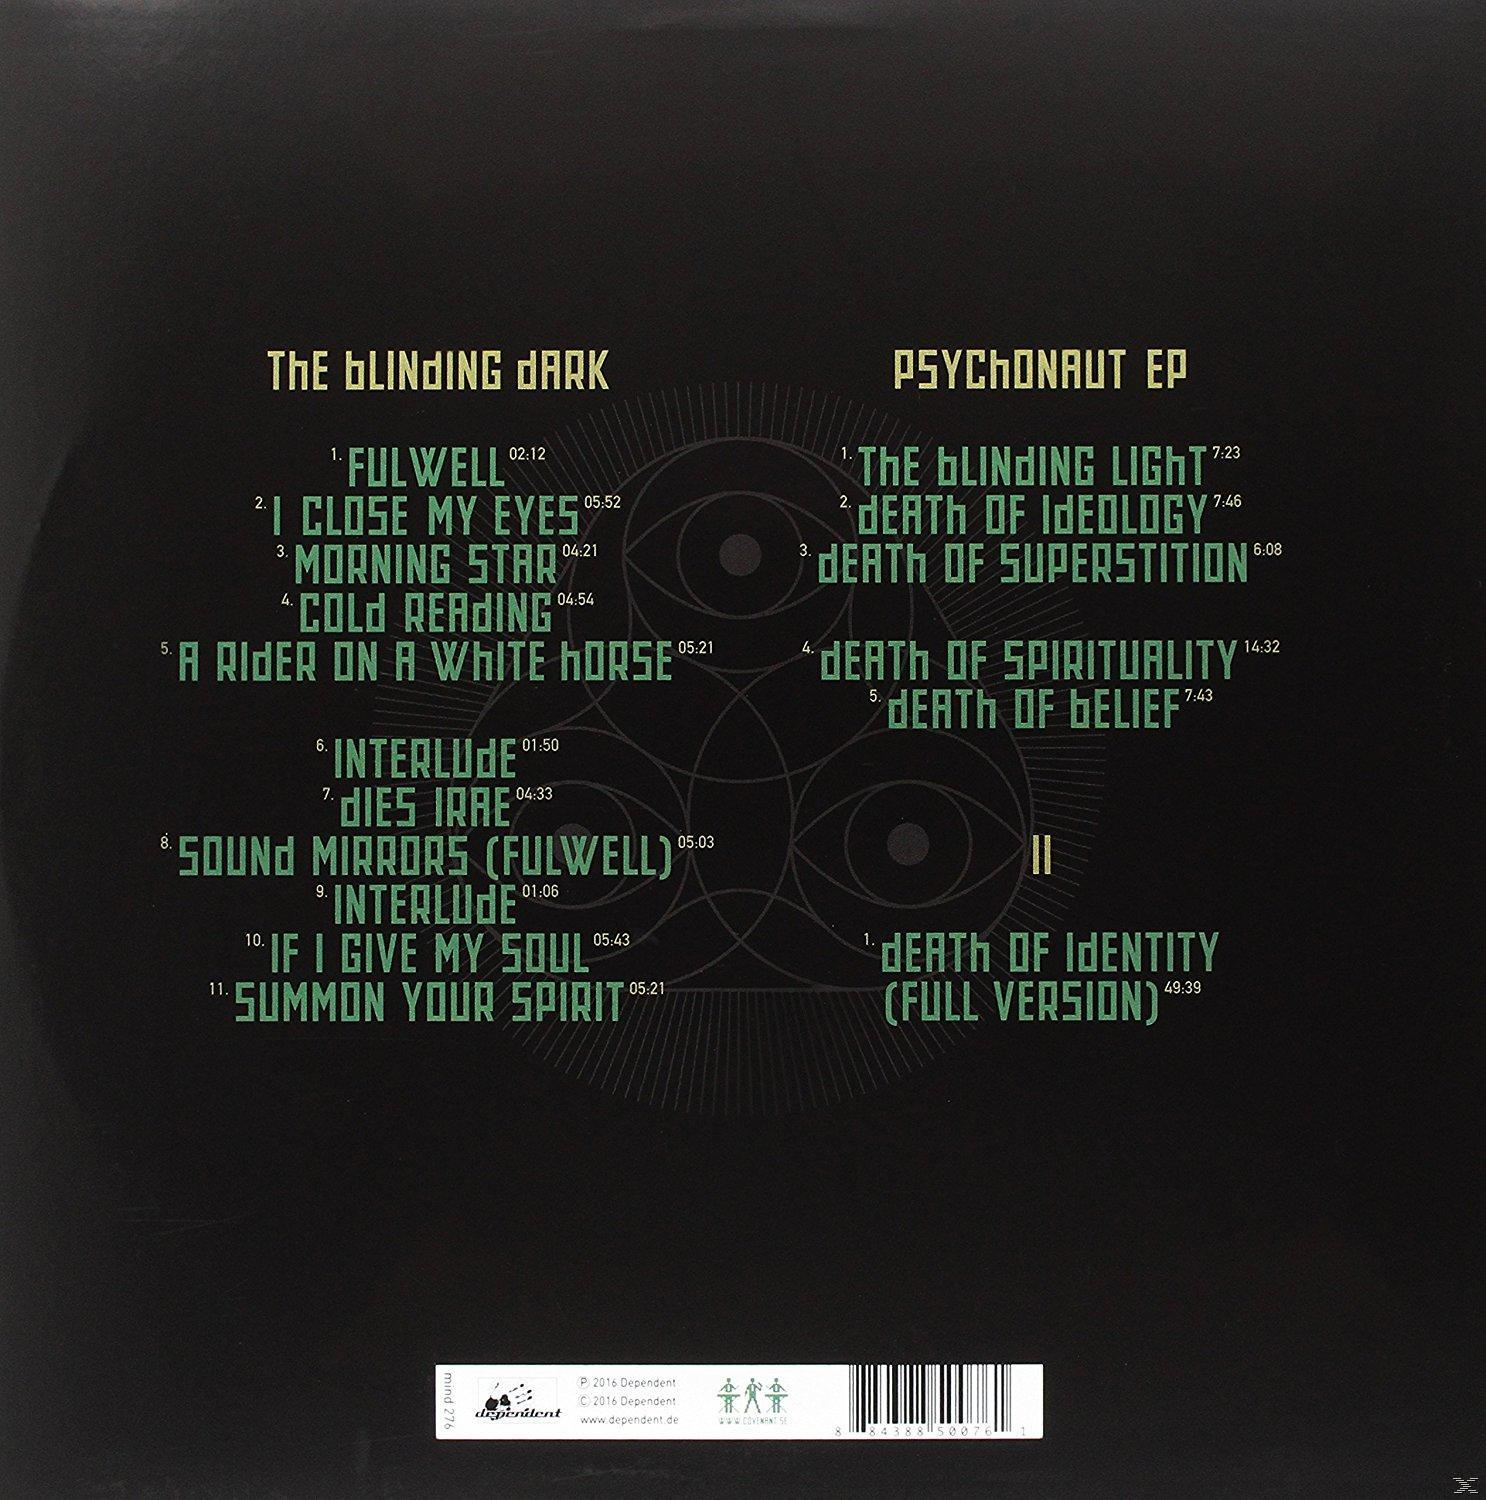 Covenant - (Vinyl) Edition) The (Limited Dark - Blinding